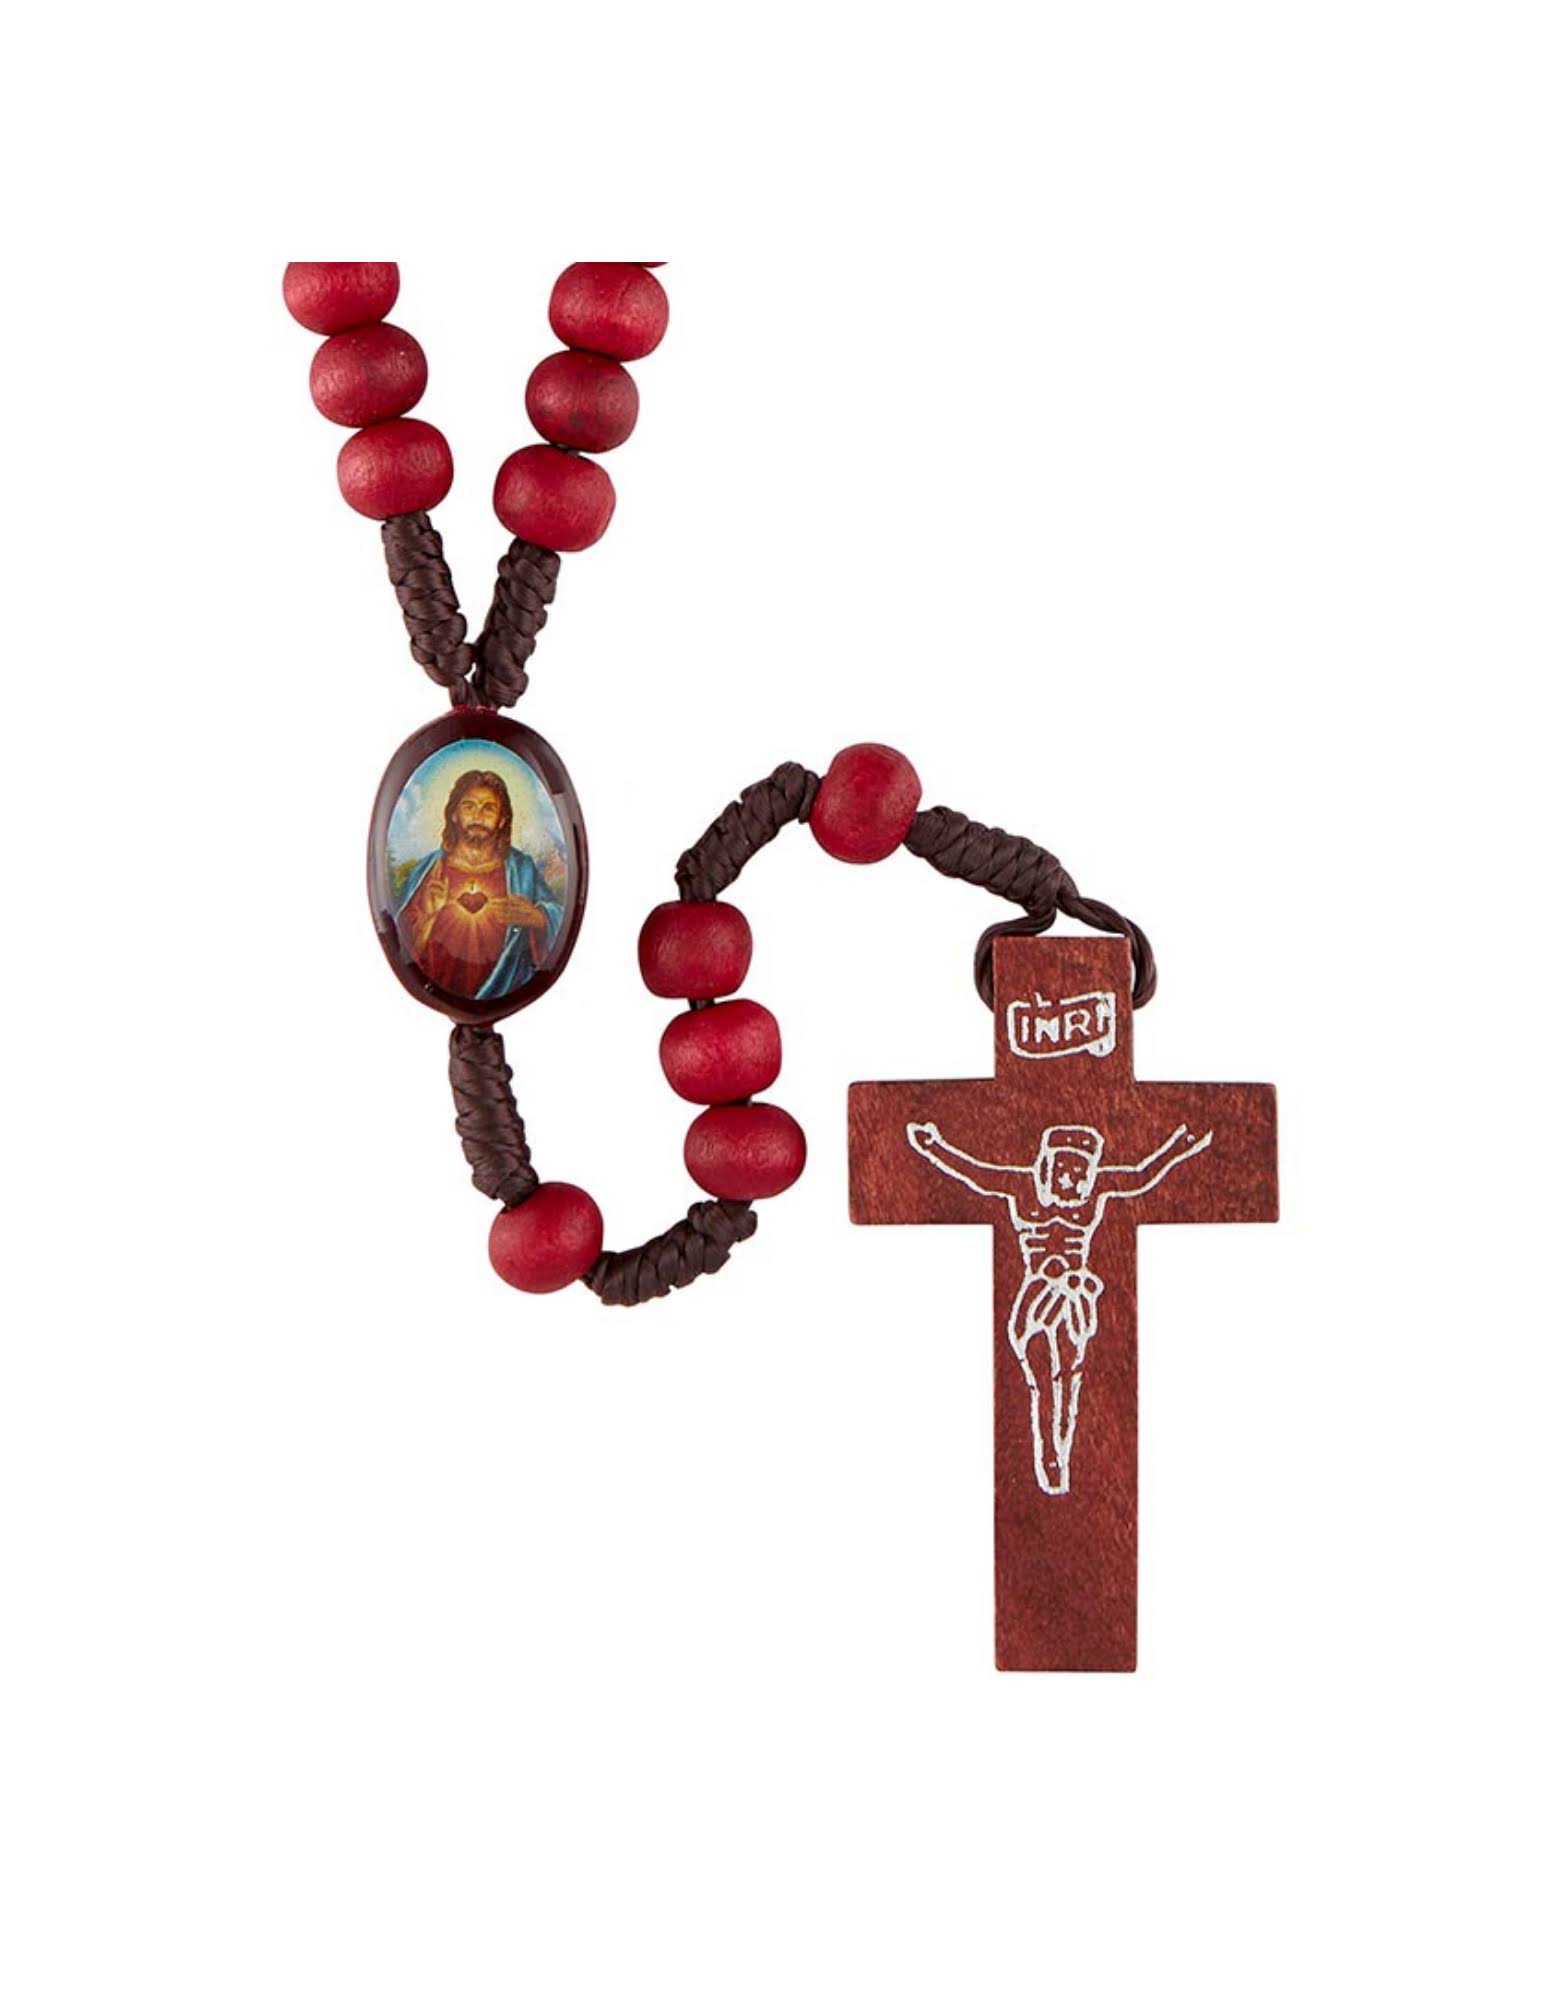 12 Berkander Bk-12204 Sacred Heart Rosary ($2.05 @ 12 min)